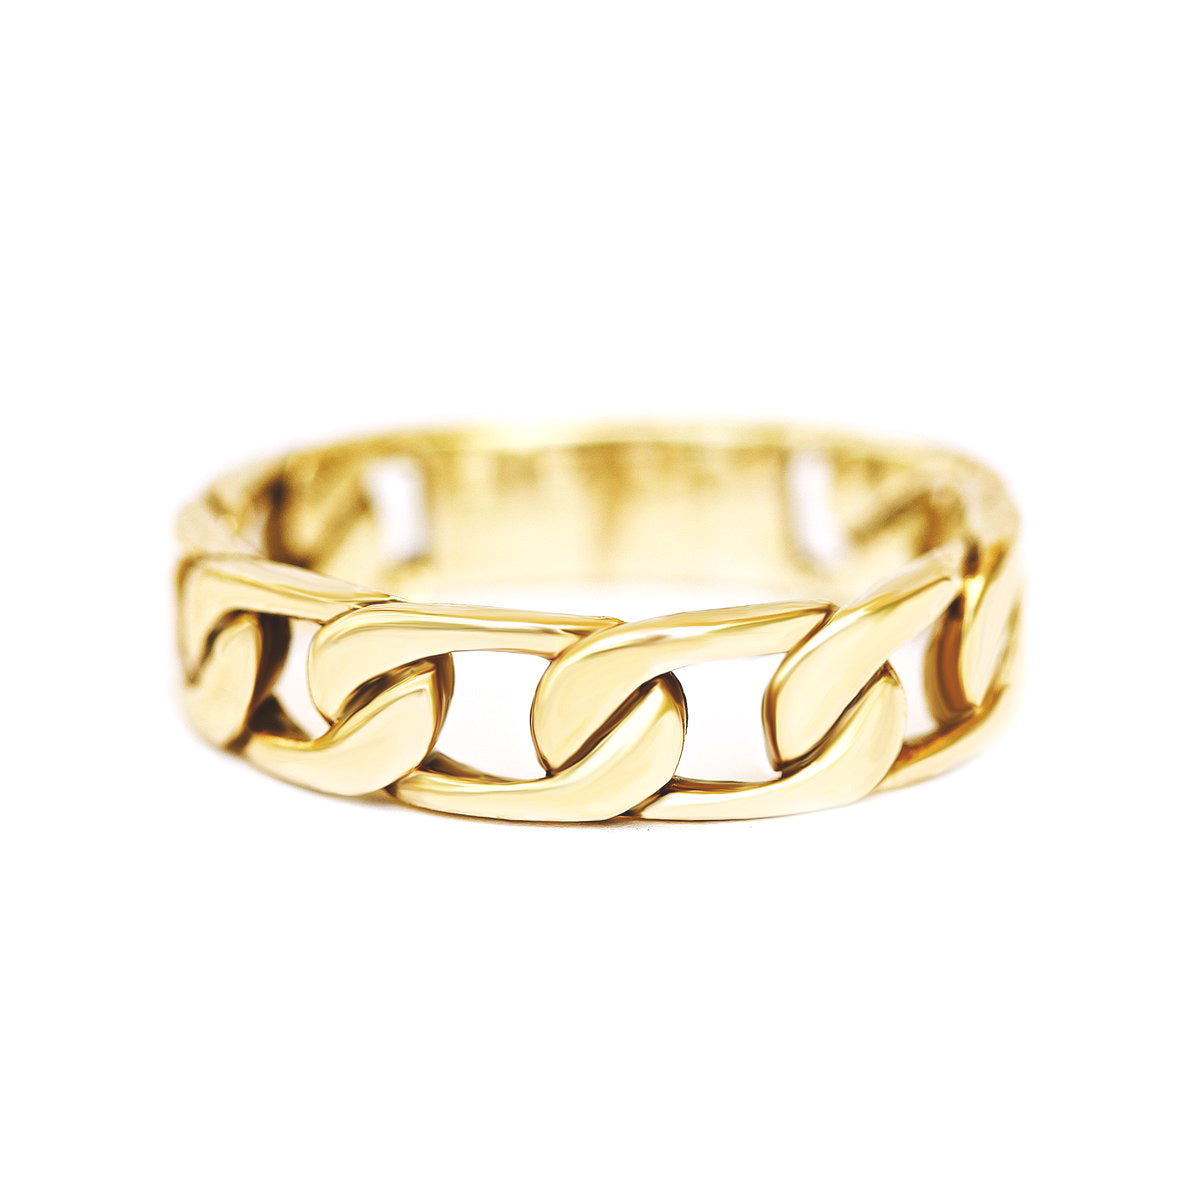 Gold flat chain wedding ring